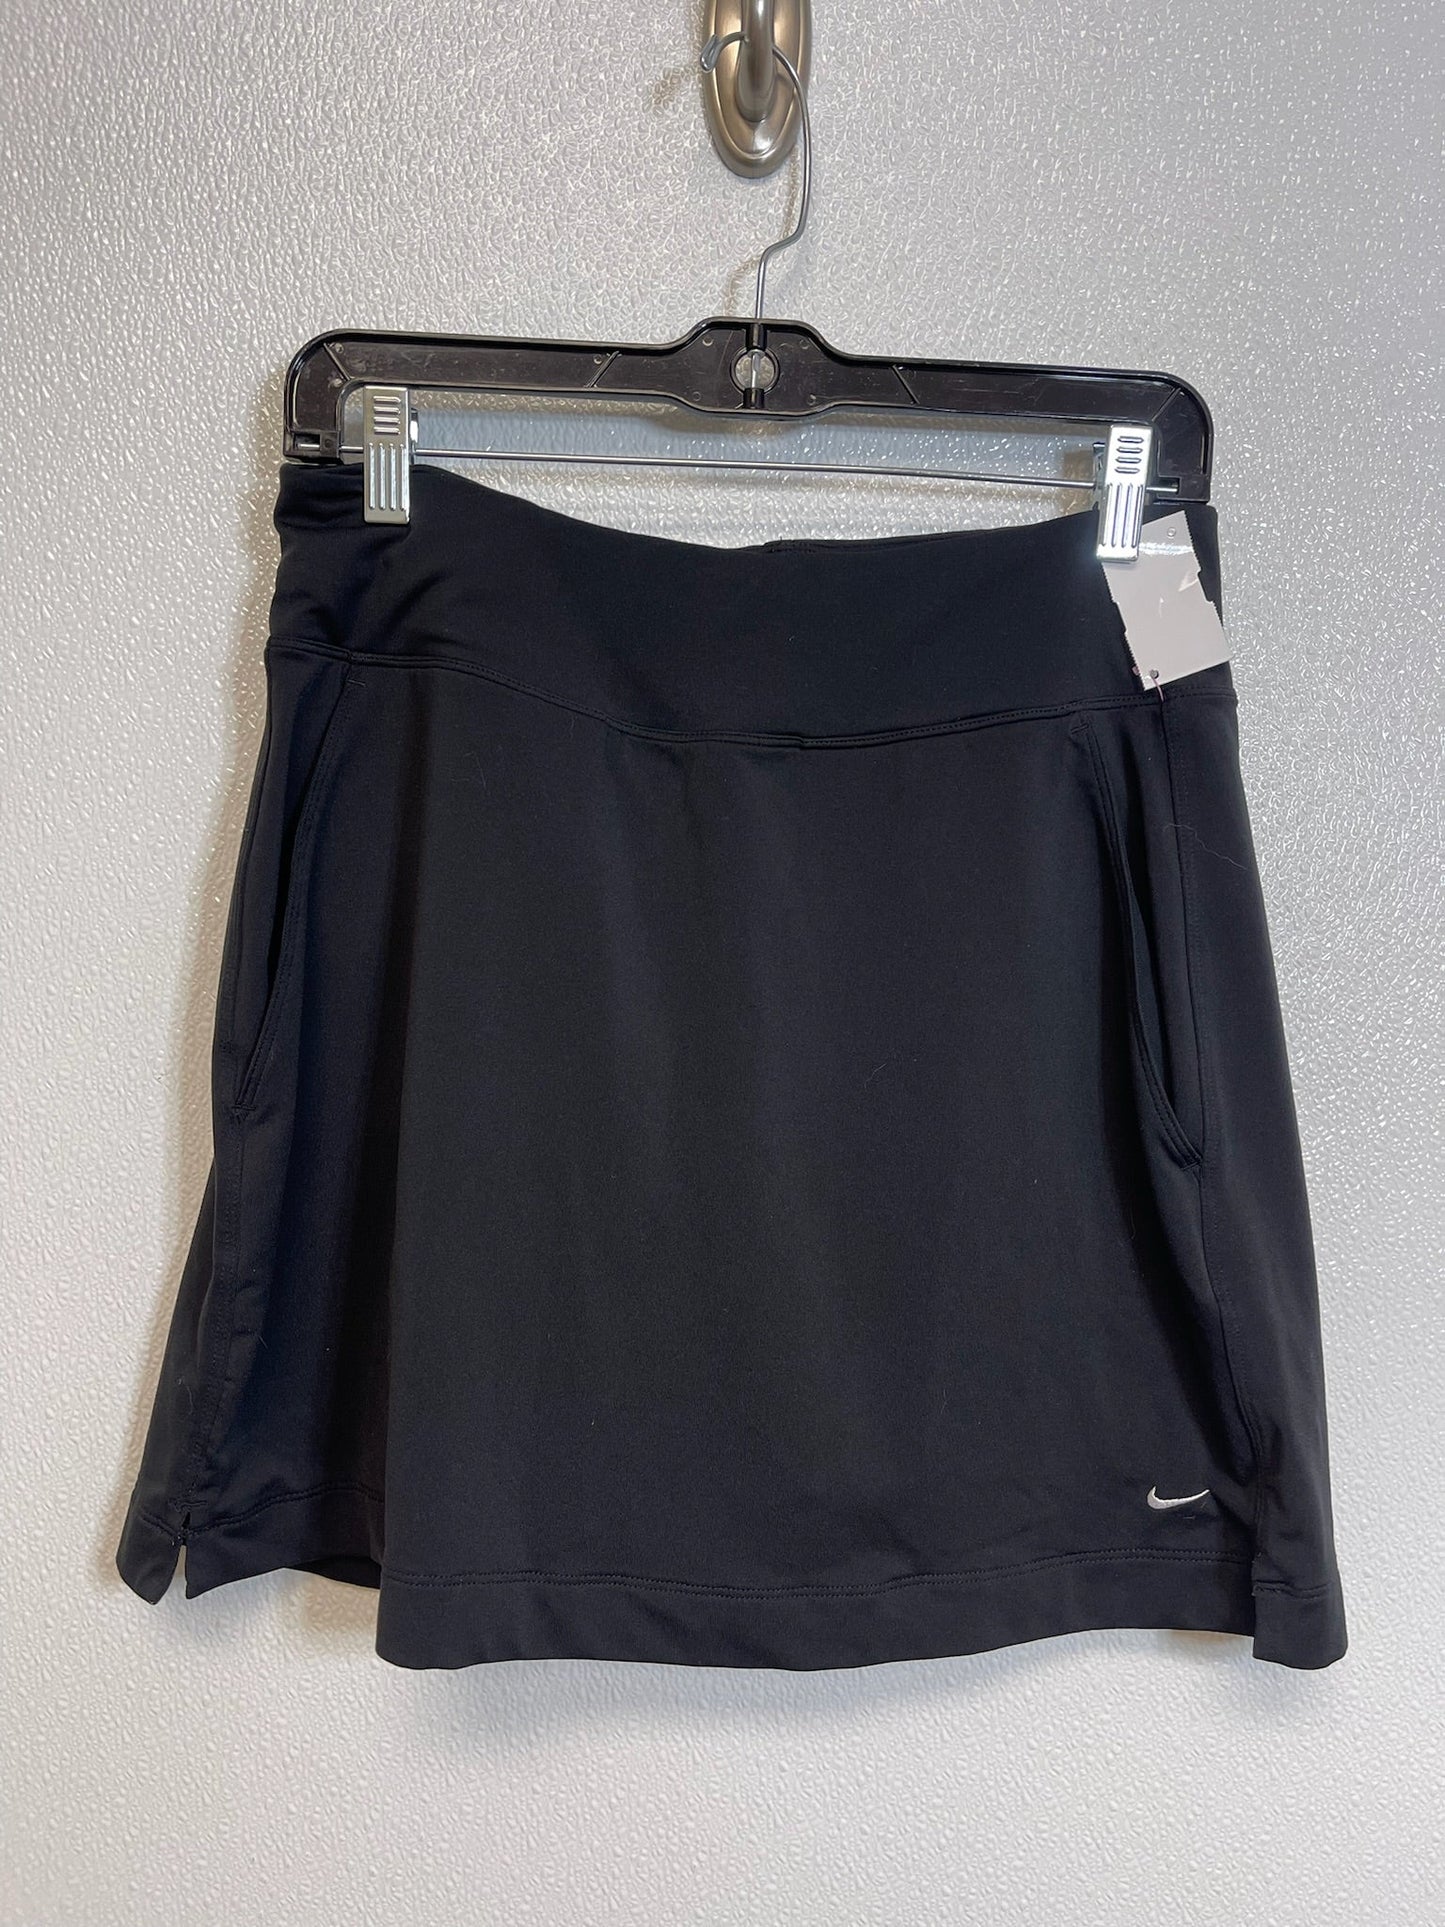 Black Athletic Skirt Skort Nike Apparel, Size S